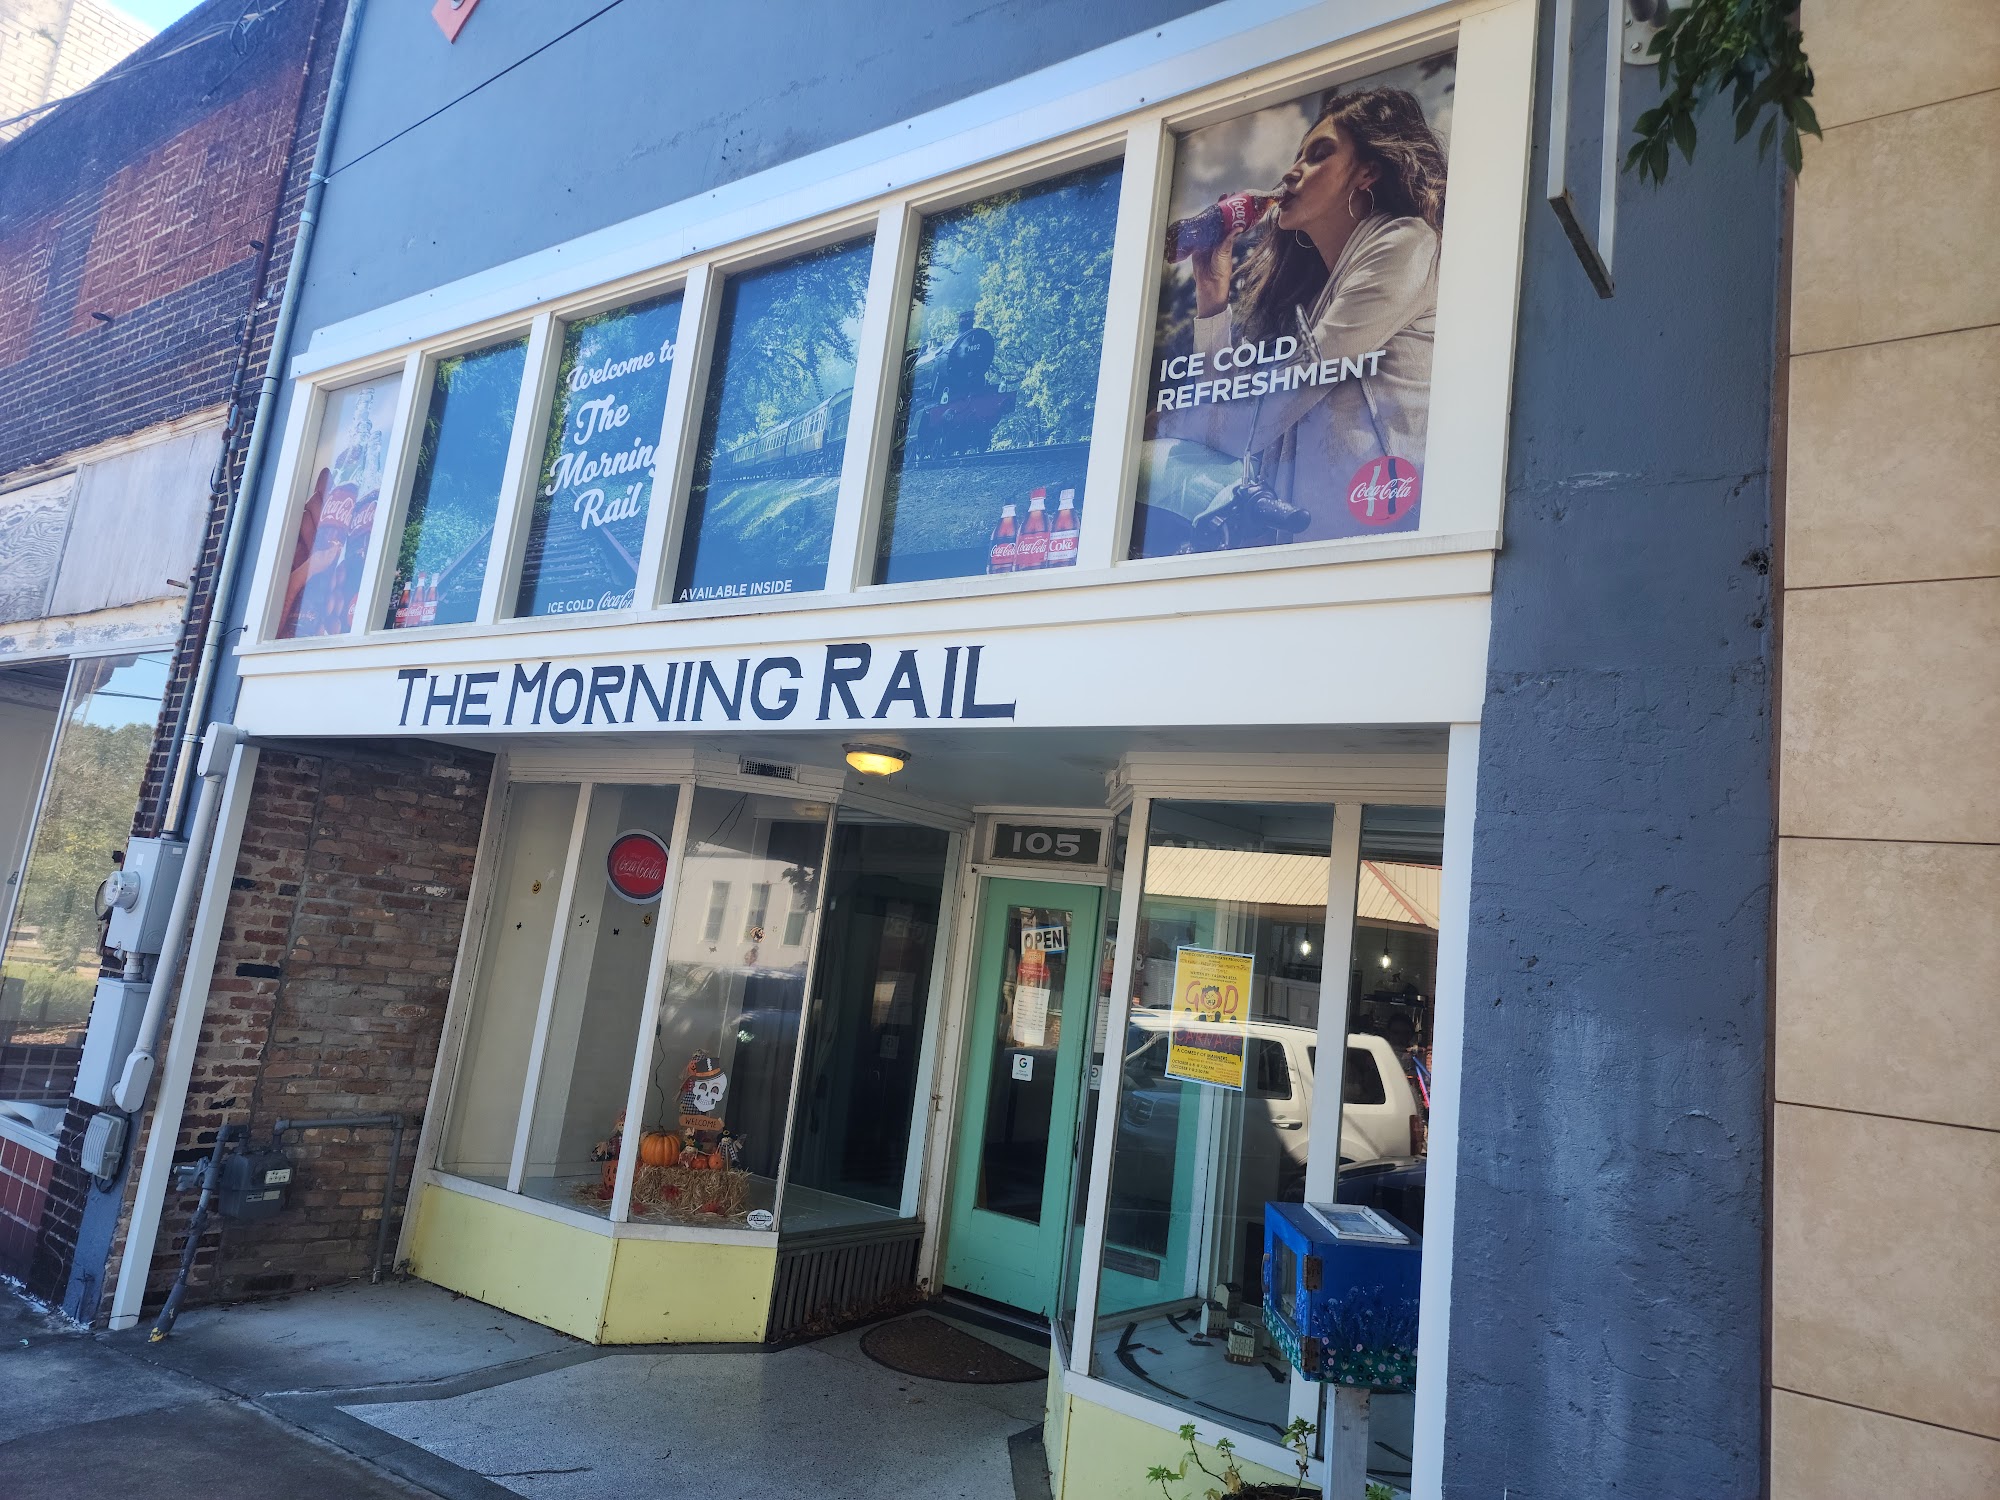 The Morning Rail